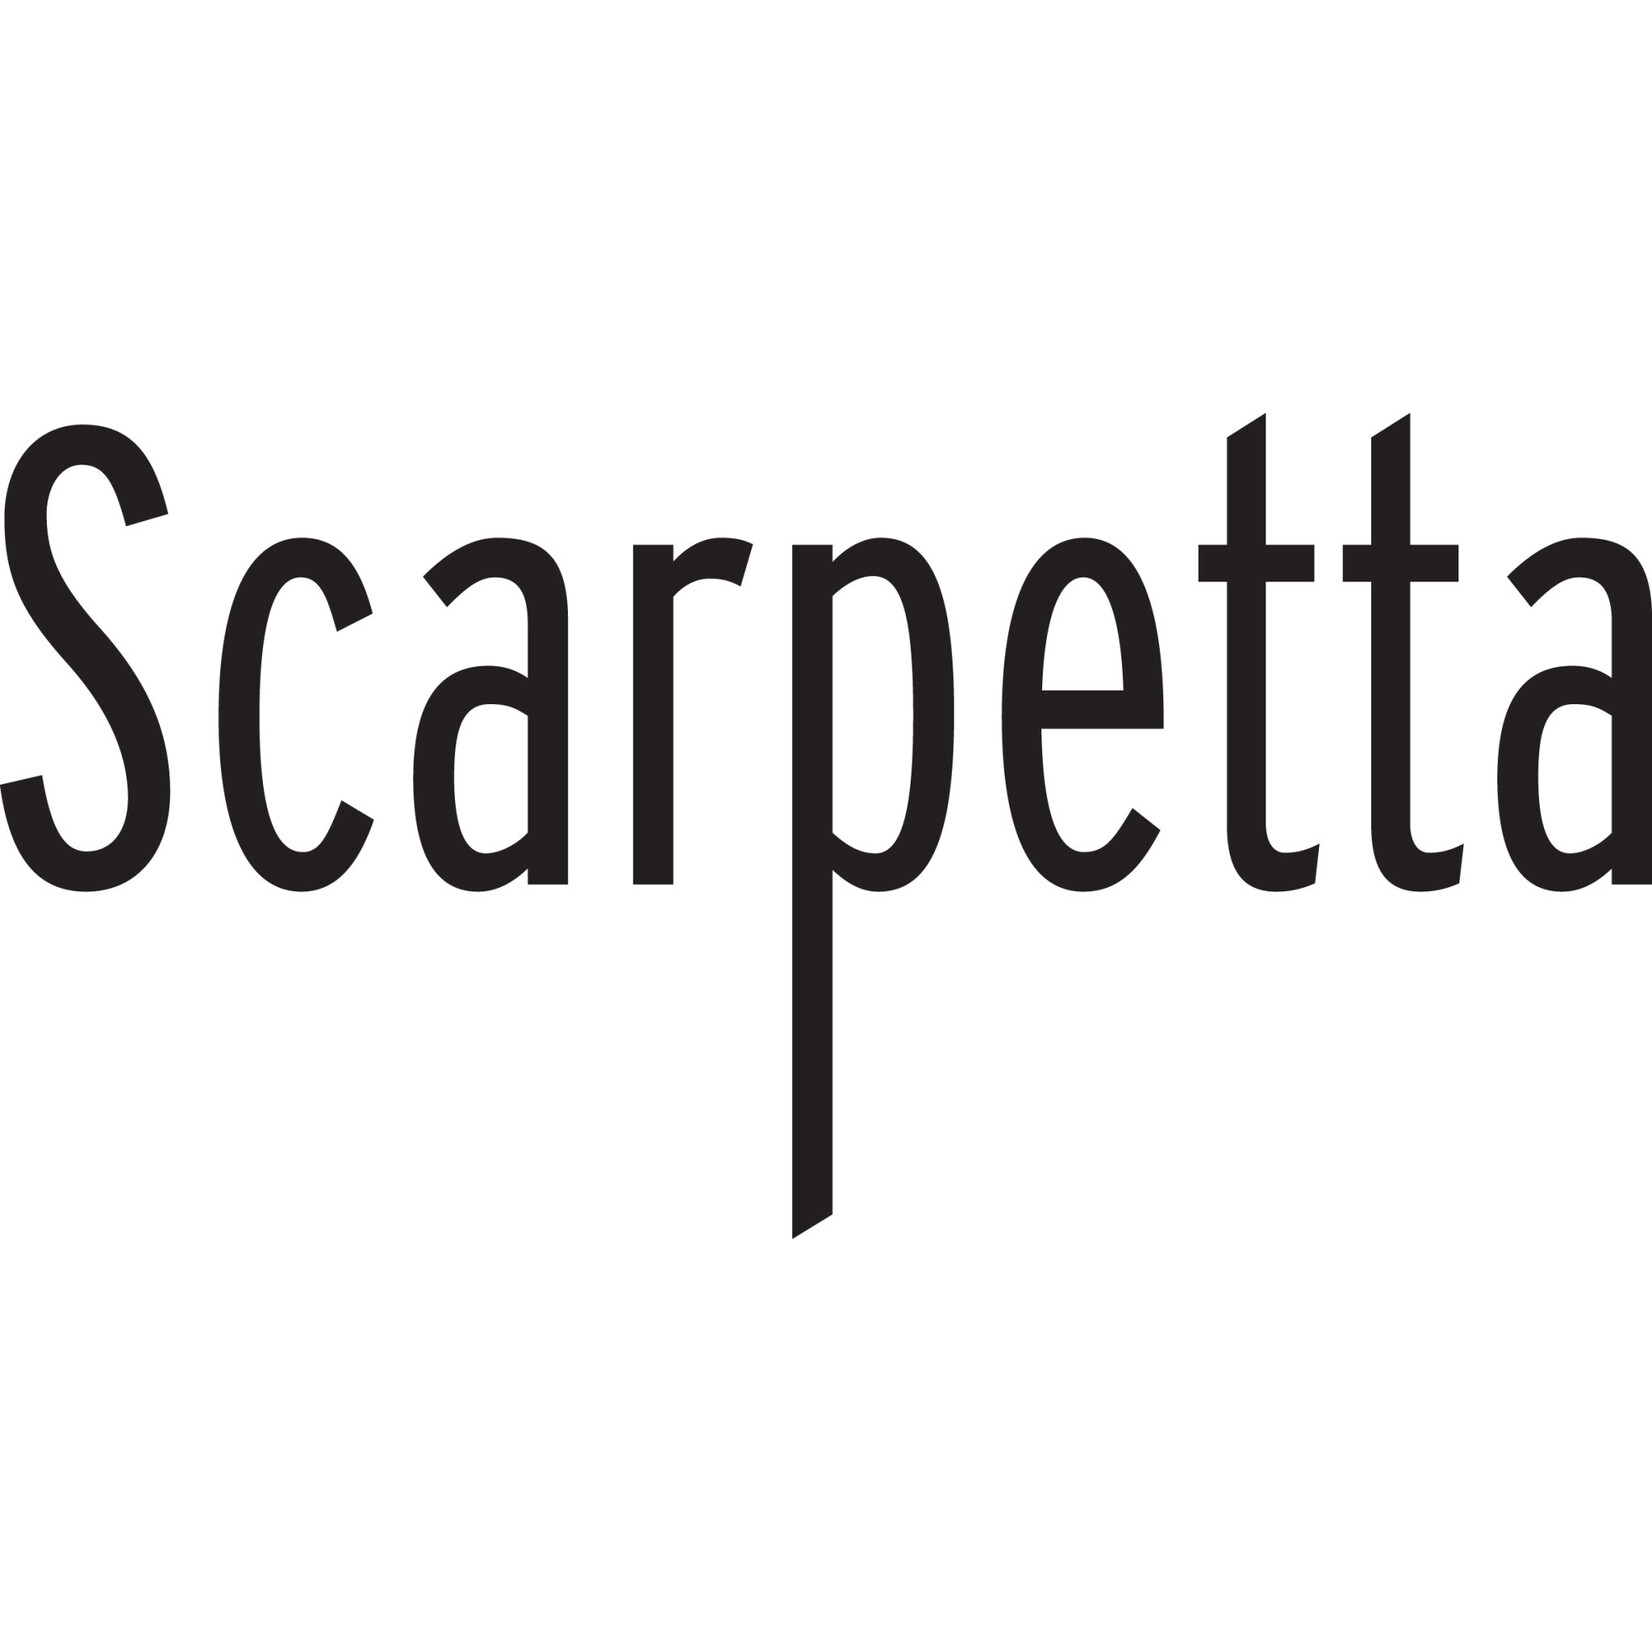 Scarpetta Scarpetta Cabernet Franc 2021  Fruili Italy